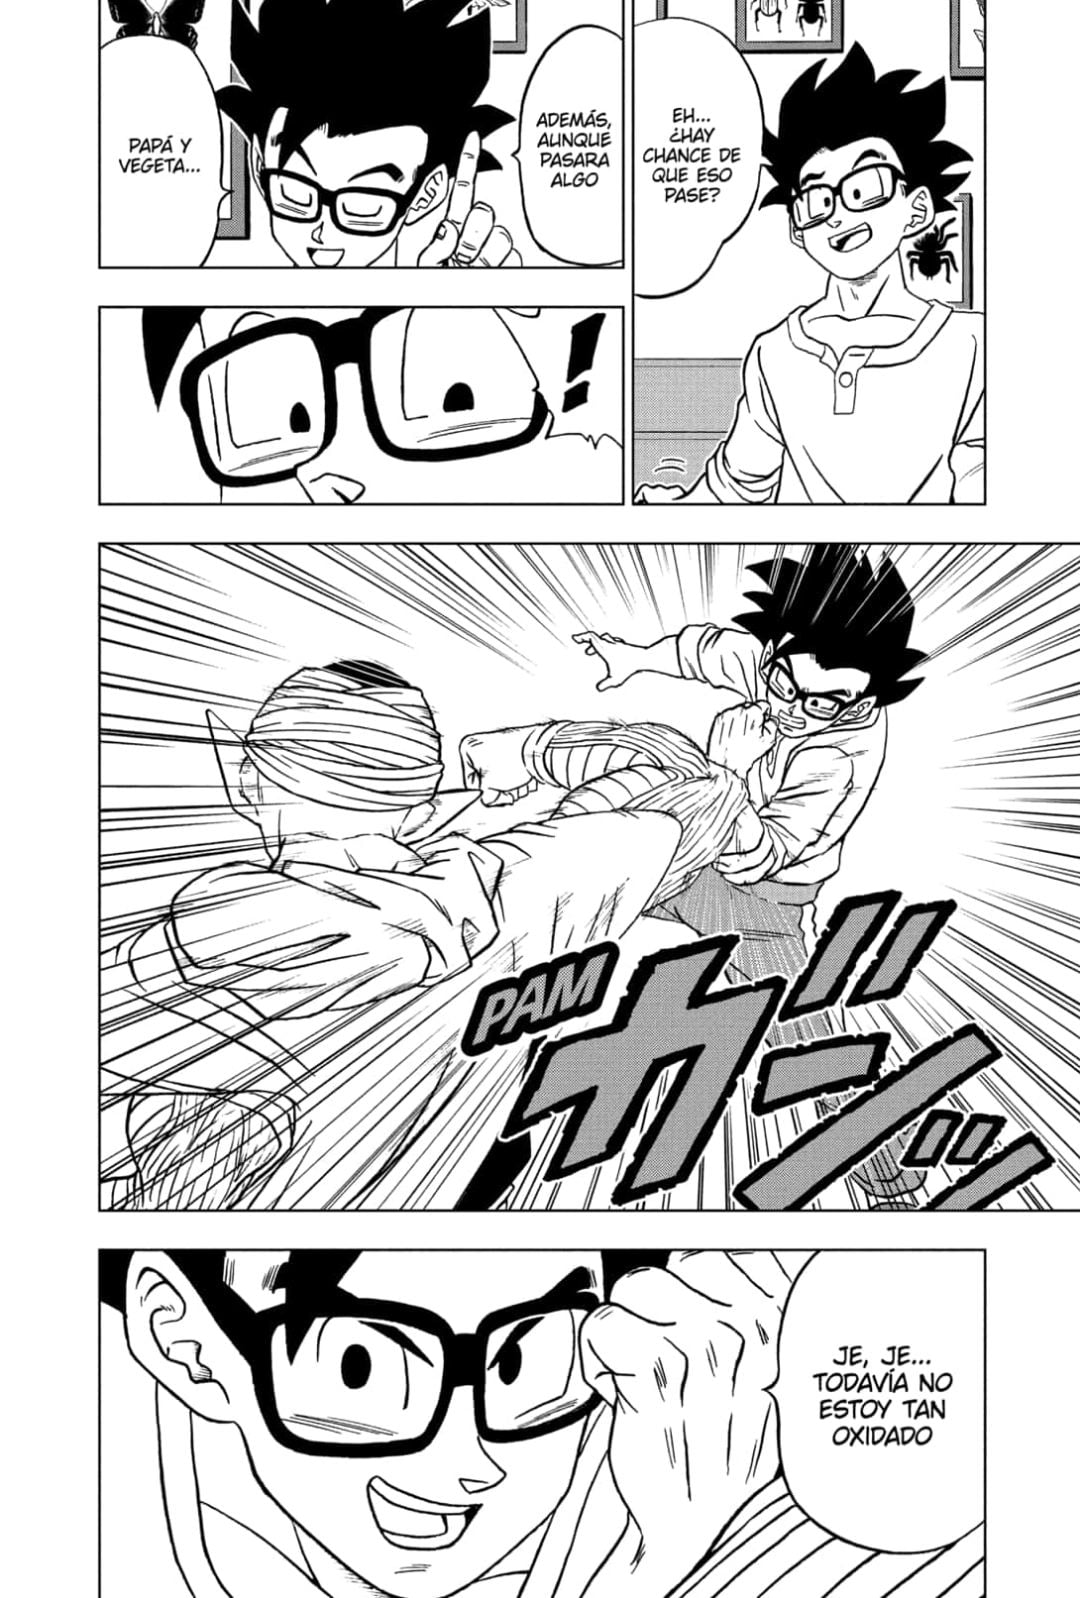 Daiko O Saiyajin on X: Mais imagens do capítulo 91 do mangá de Dragon Ball  Super! O início do arco Super Hero! Kuririn perdeu pro Hachimaru😂 1/3   / X